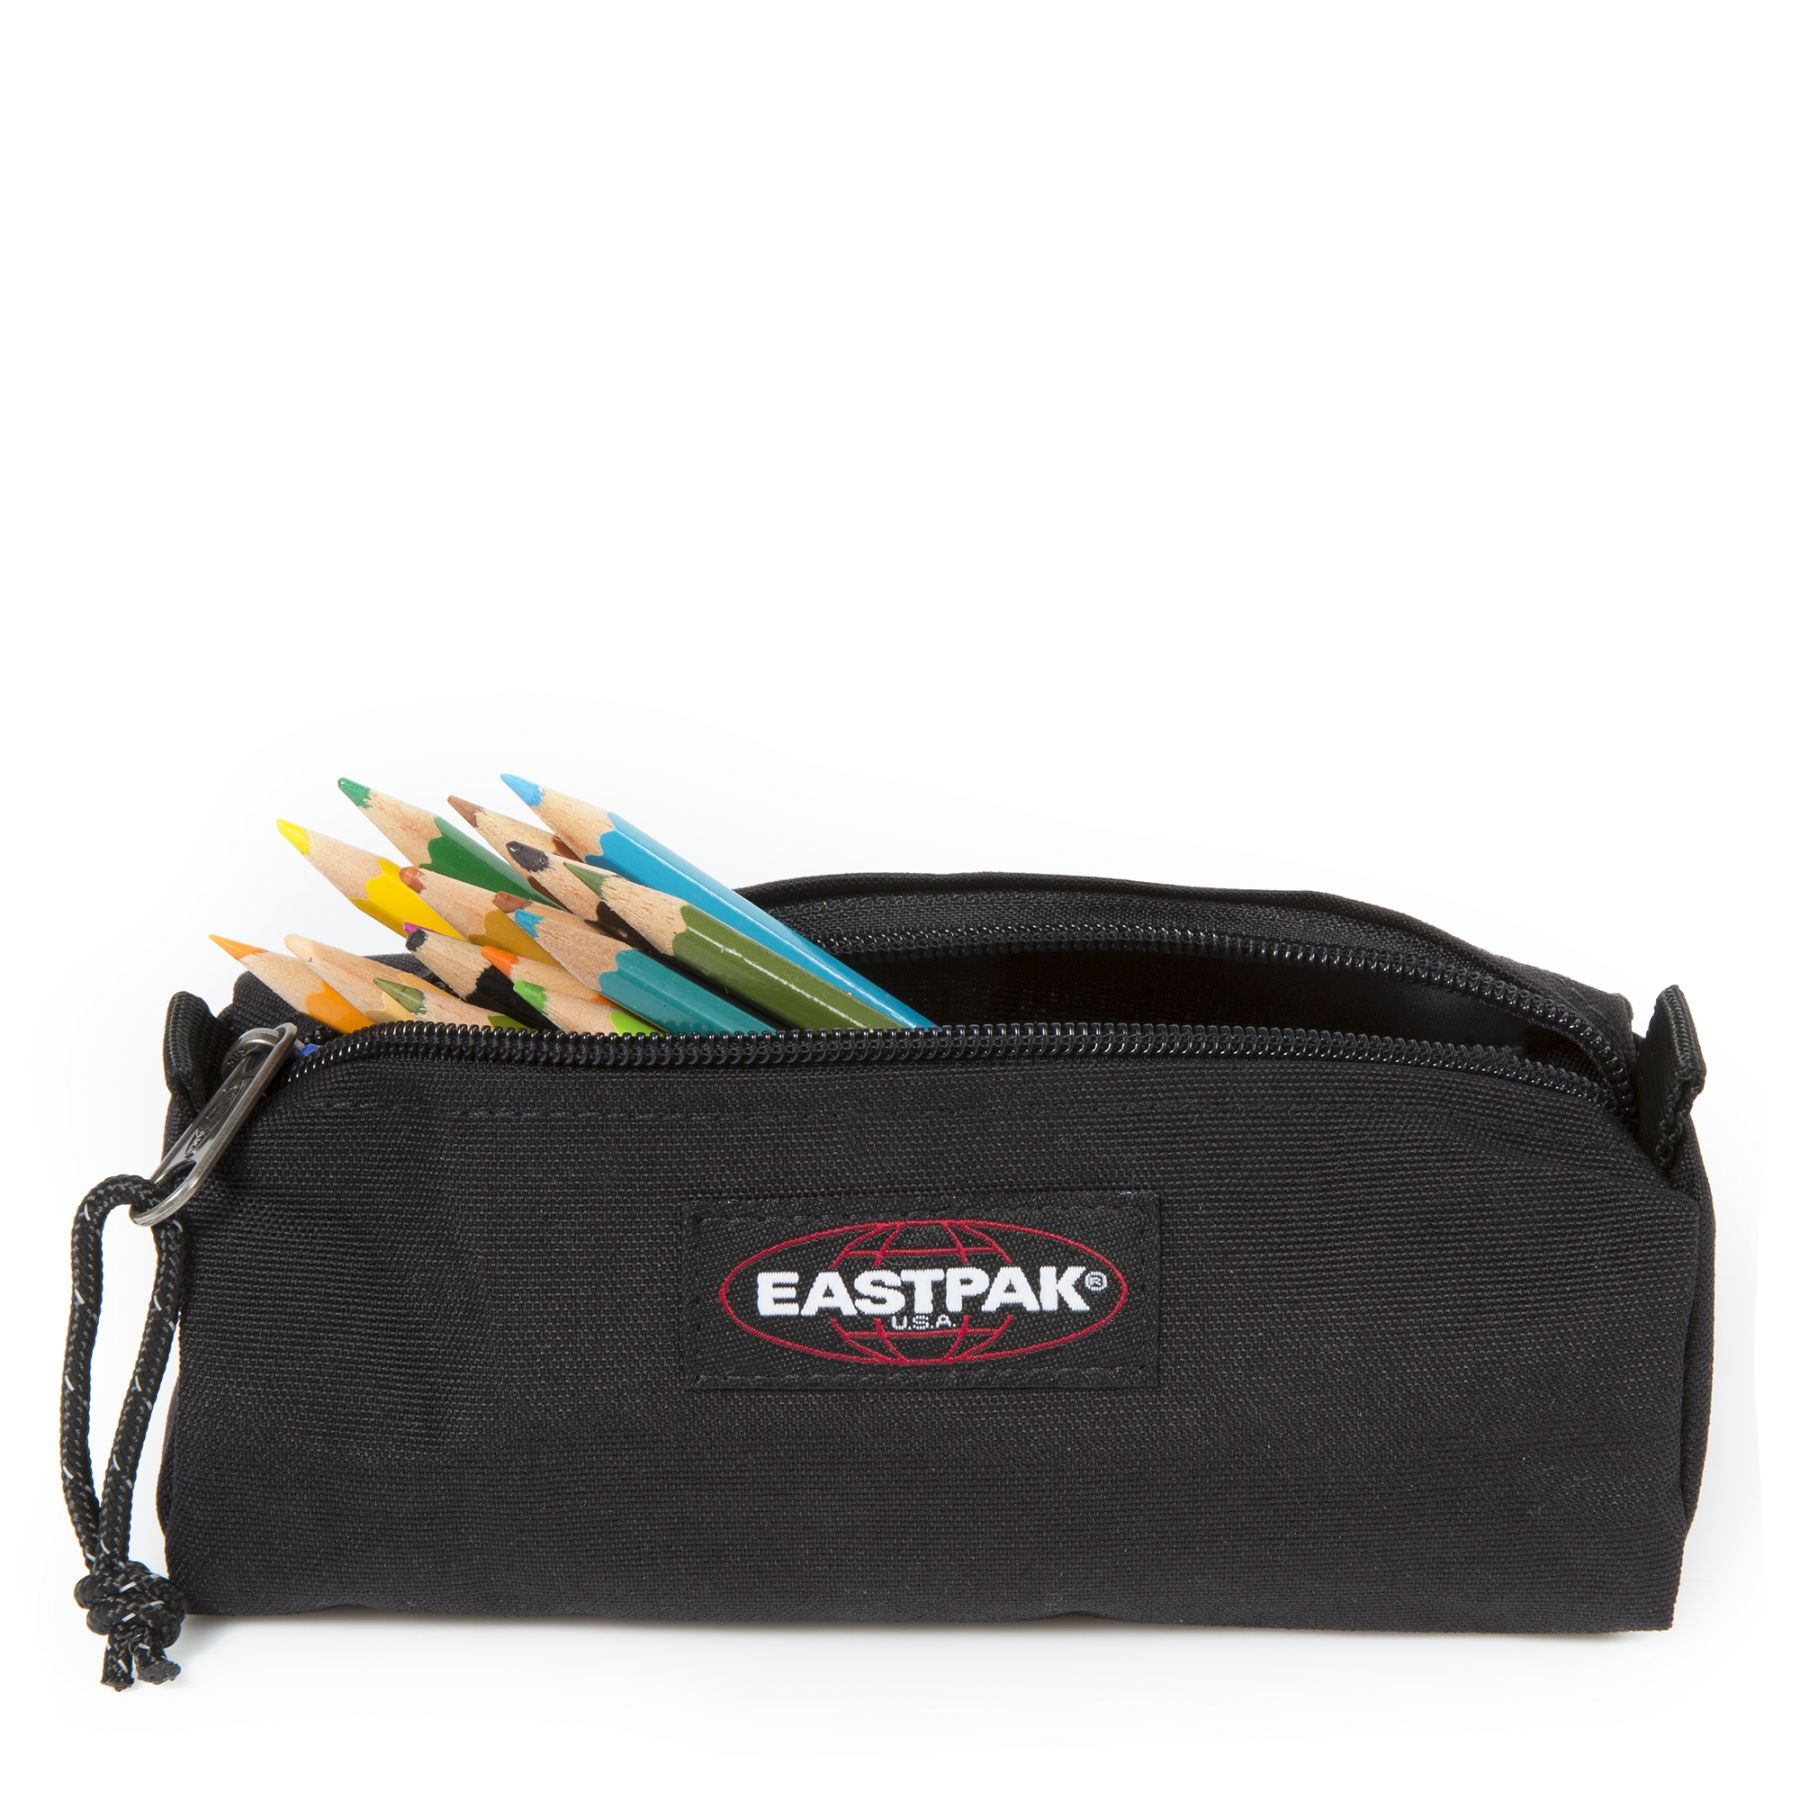 EASTPAK Benchmark Single Pencil Case, 21 cm